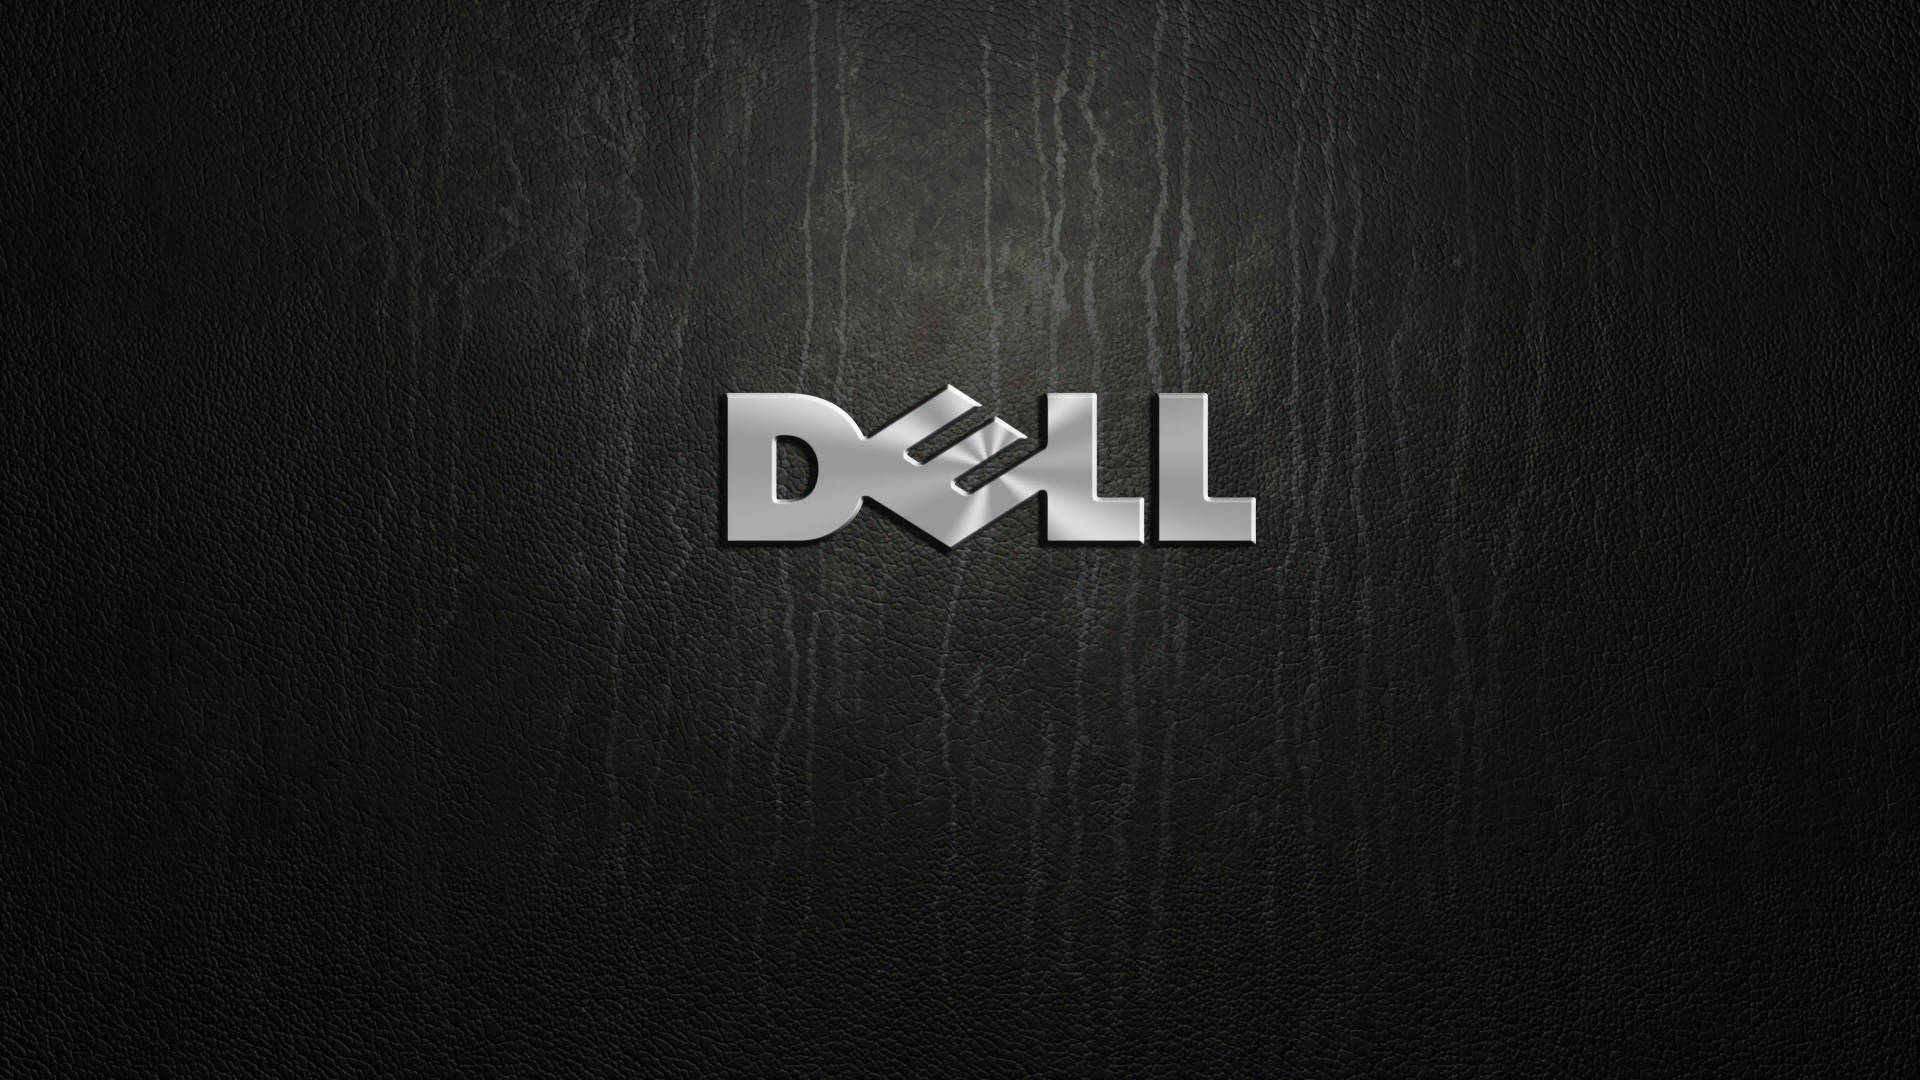 Dell 4k Logo On Wood